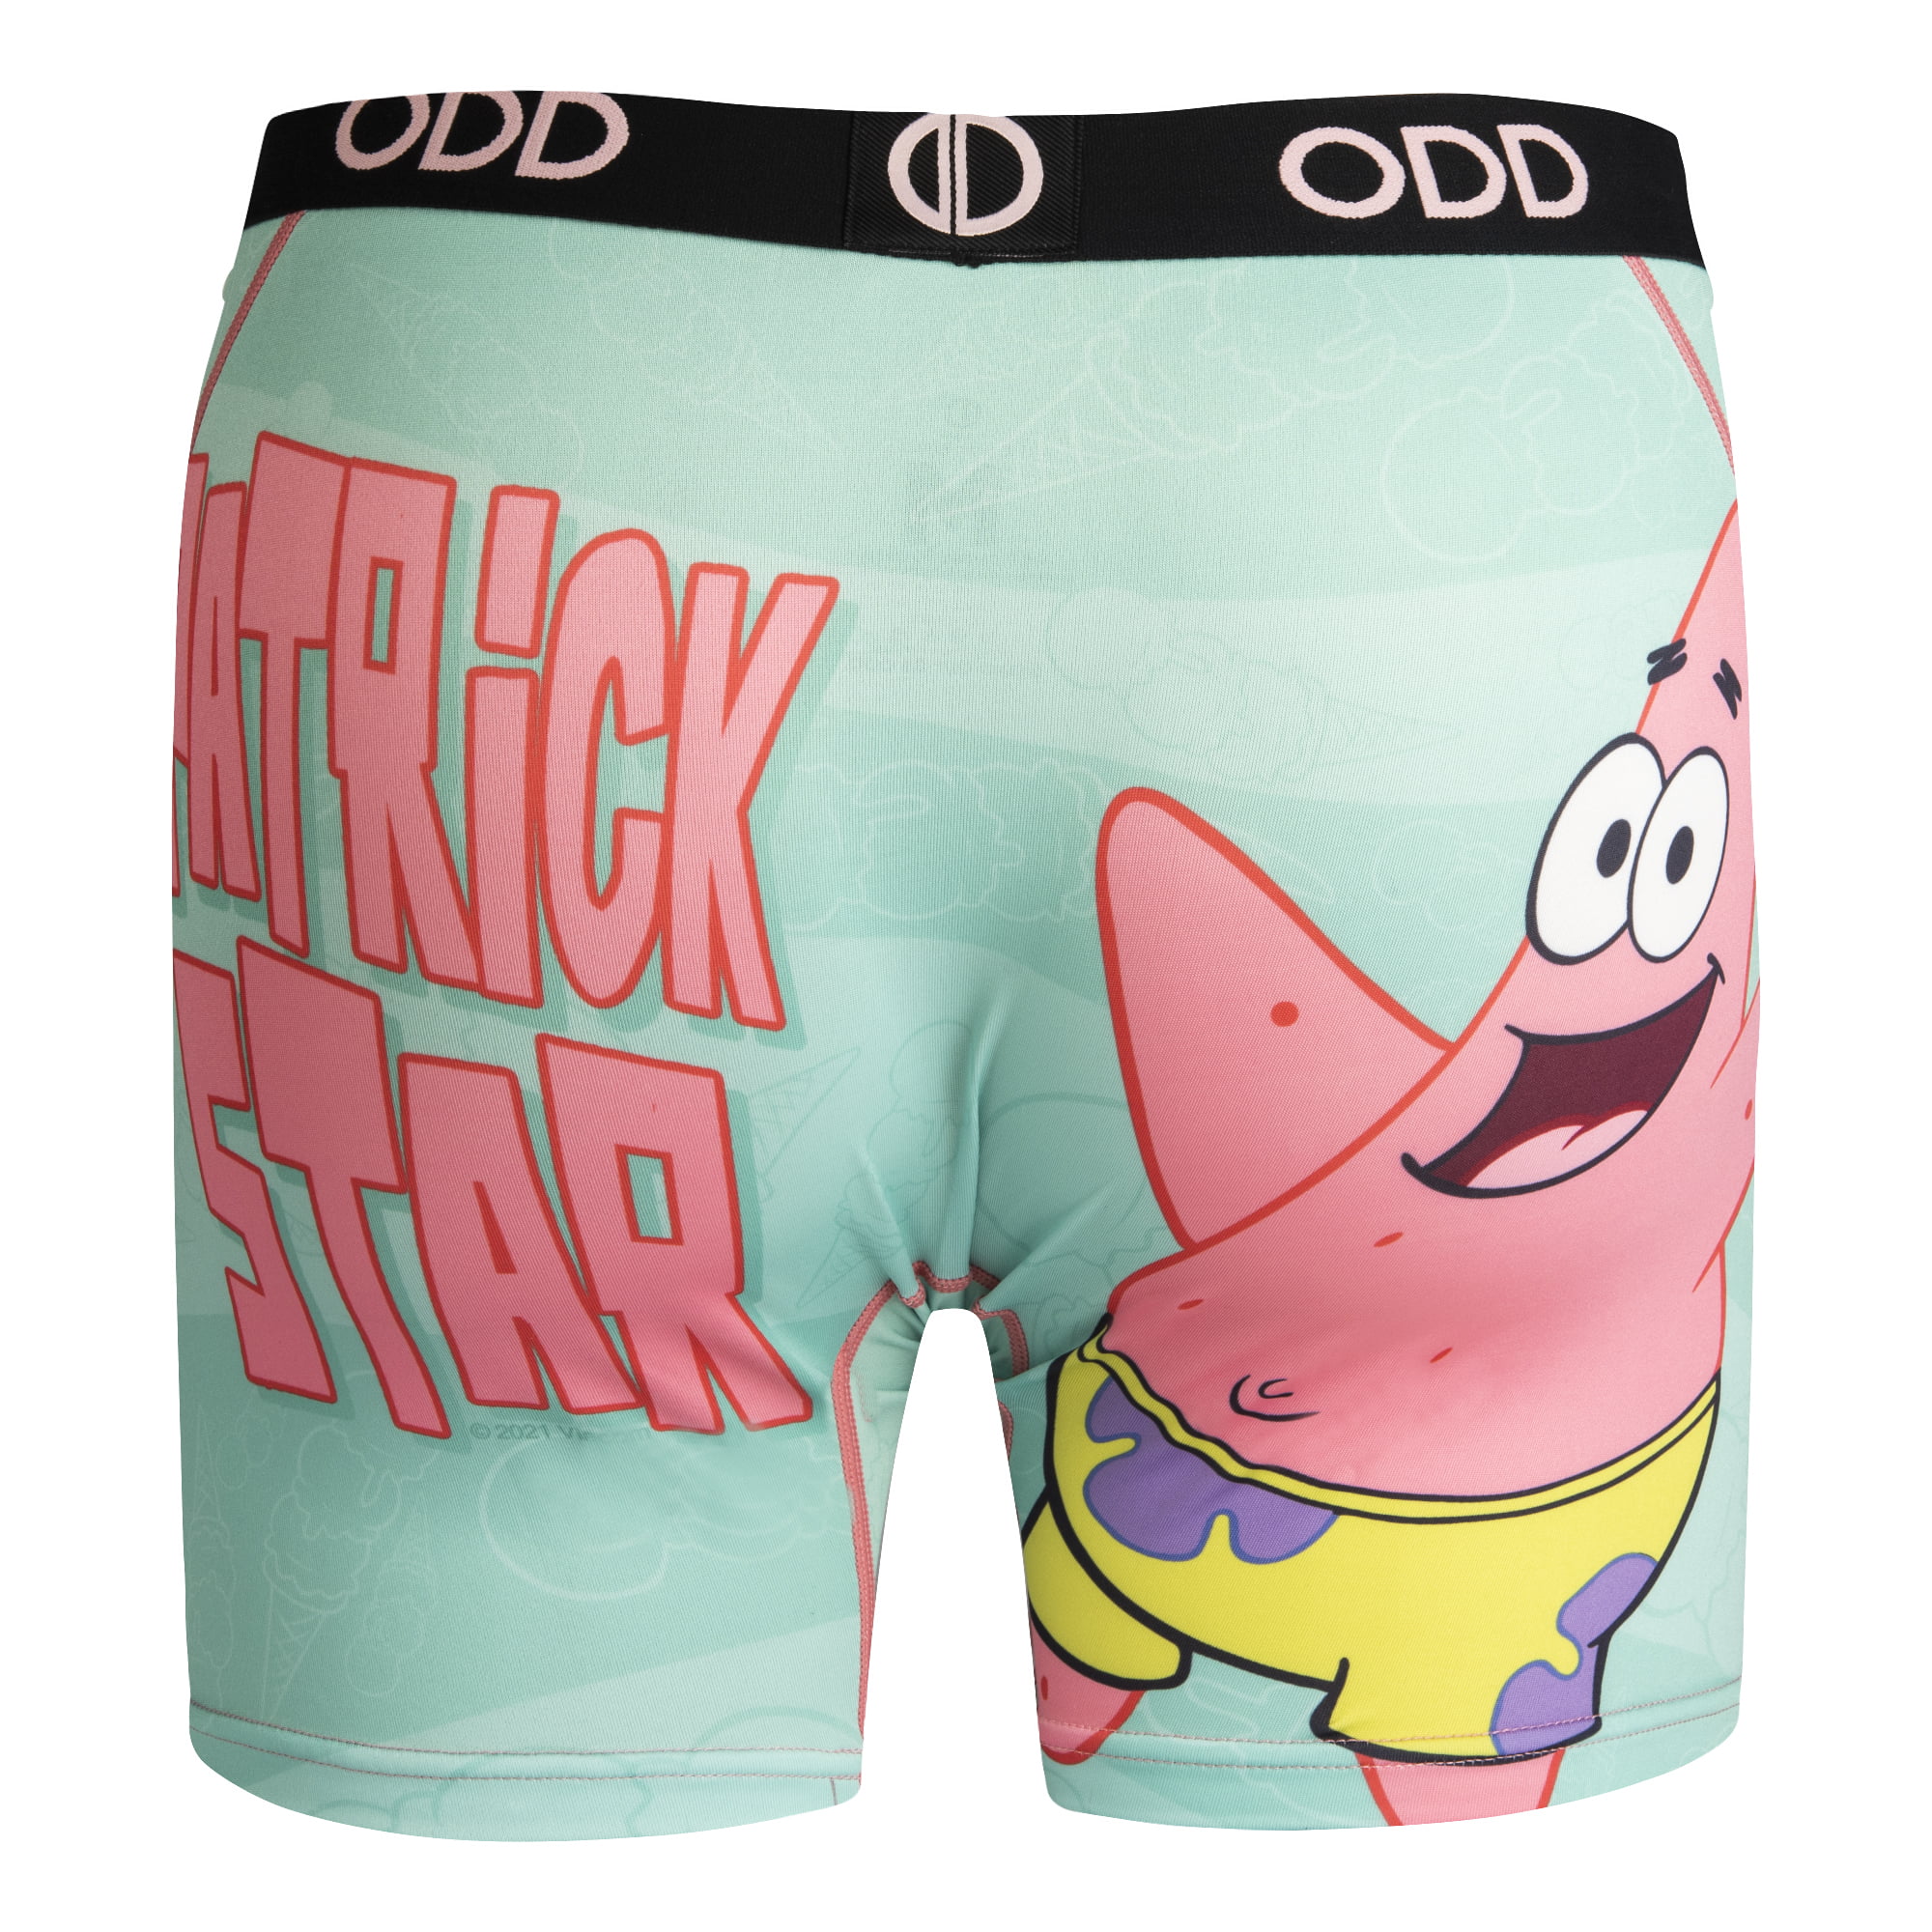 Odd Sox, Funny Men's Boxer Briefs Underwear, Nickelodeon SpongeBob